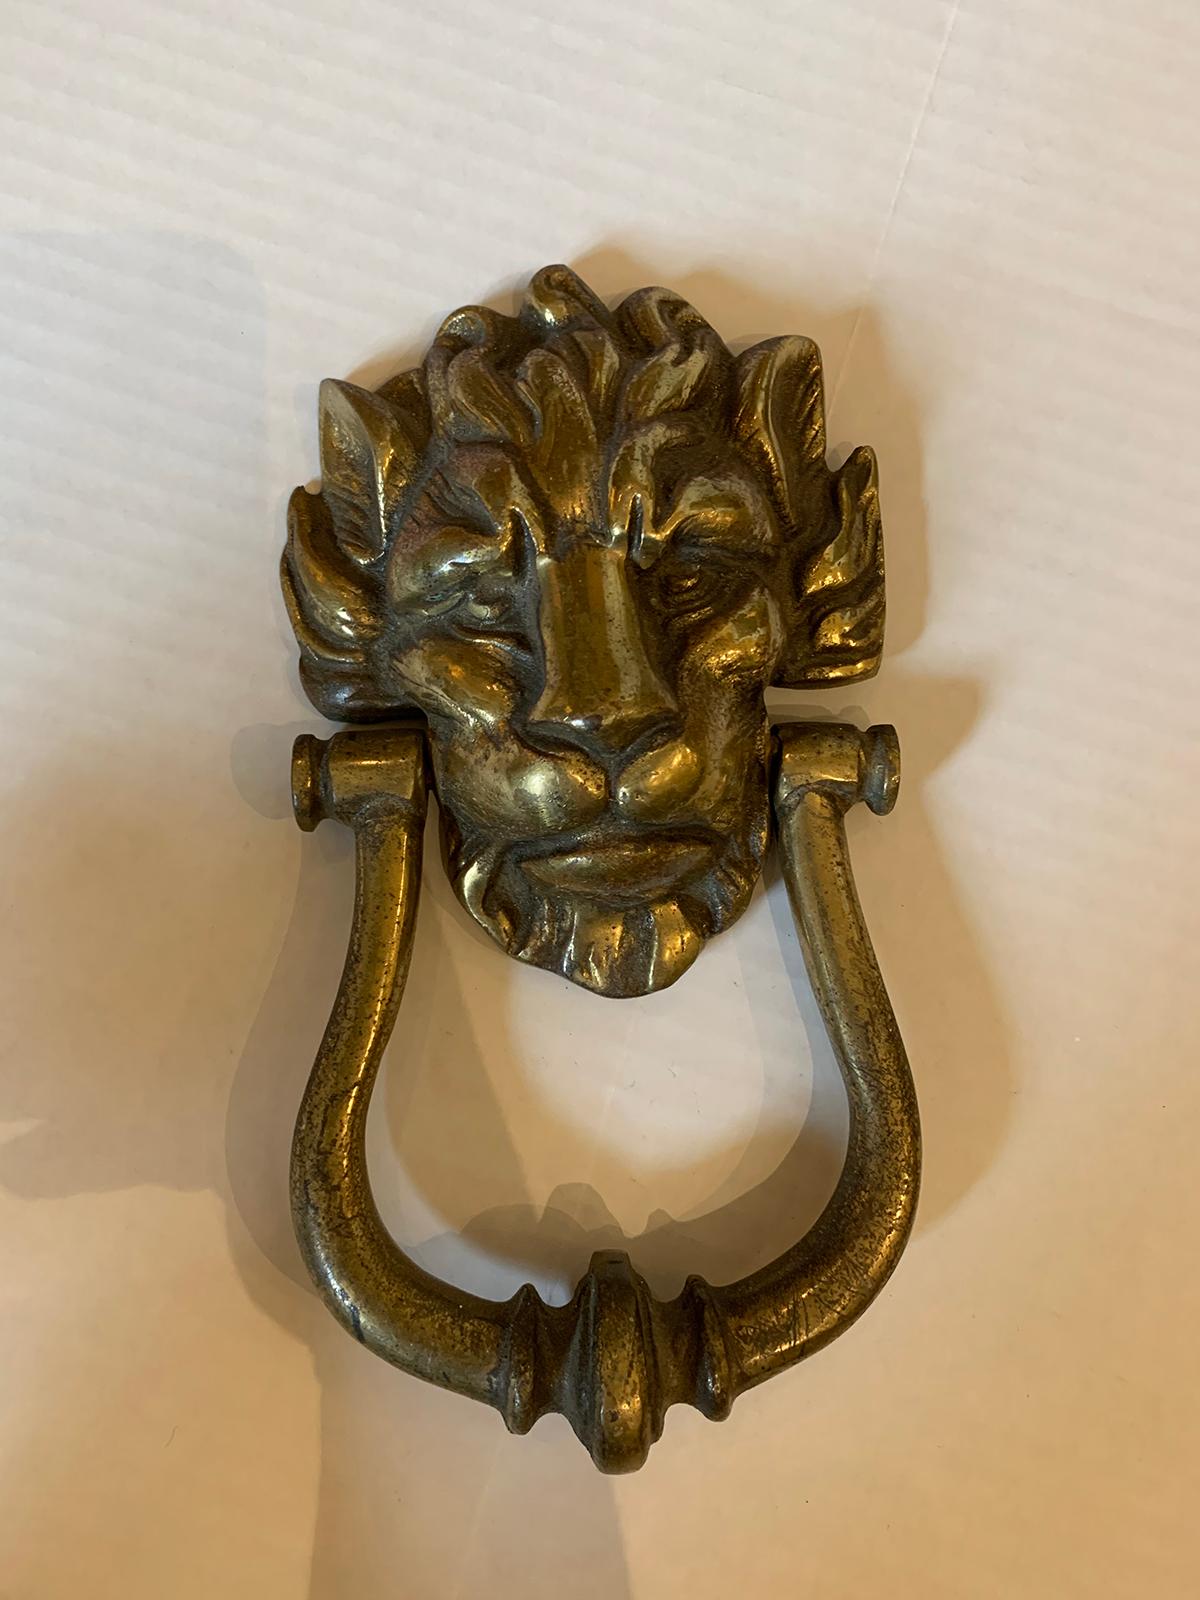 19th-20th century bronze lion door knocker with strike.